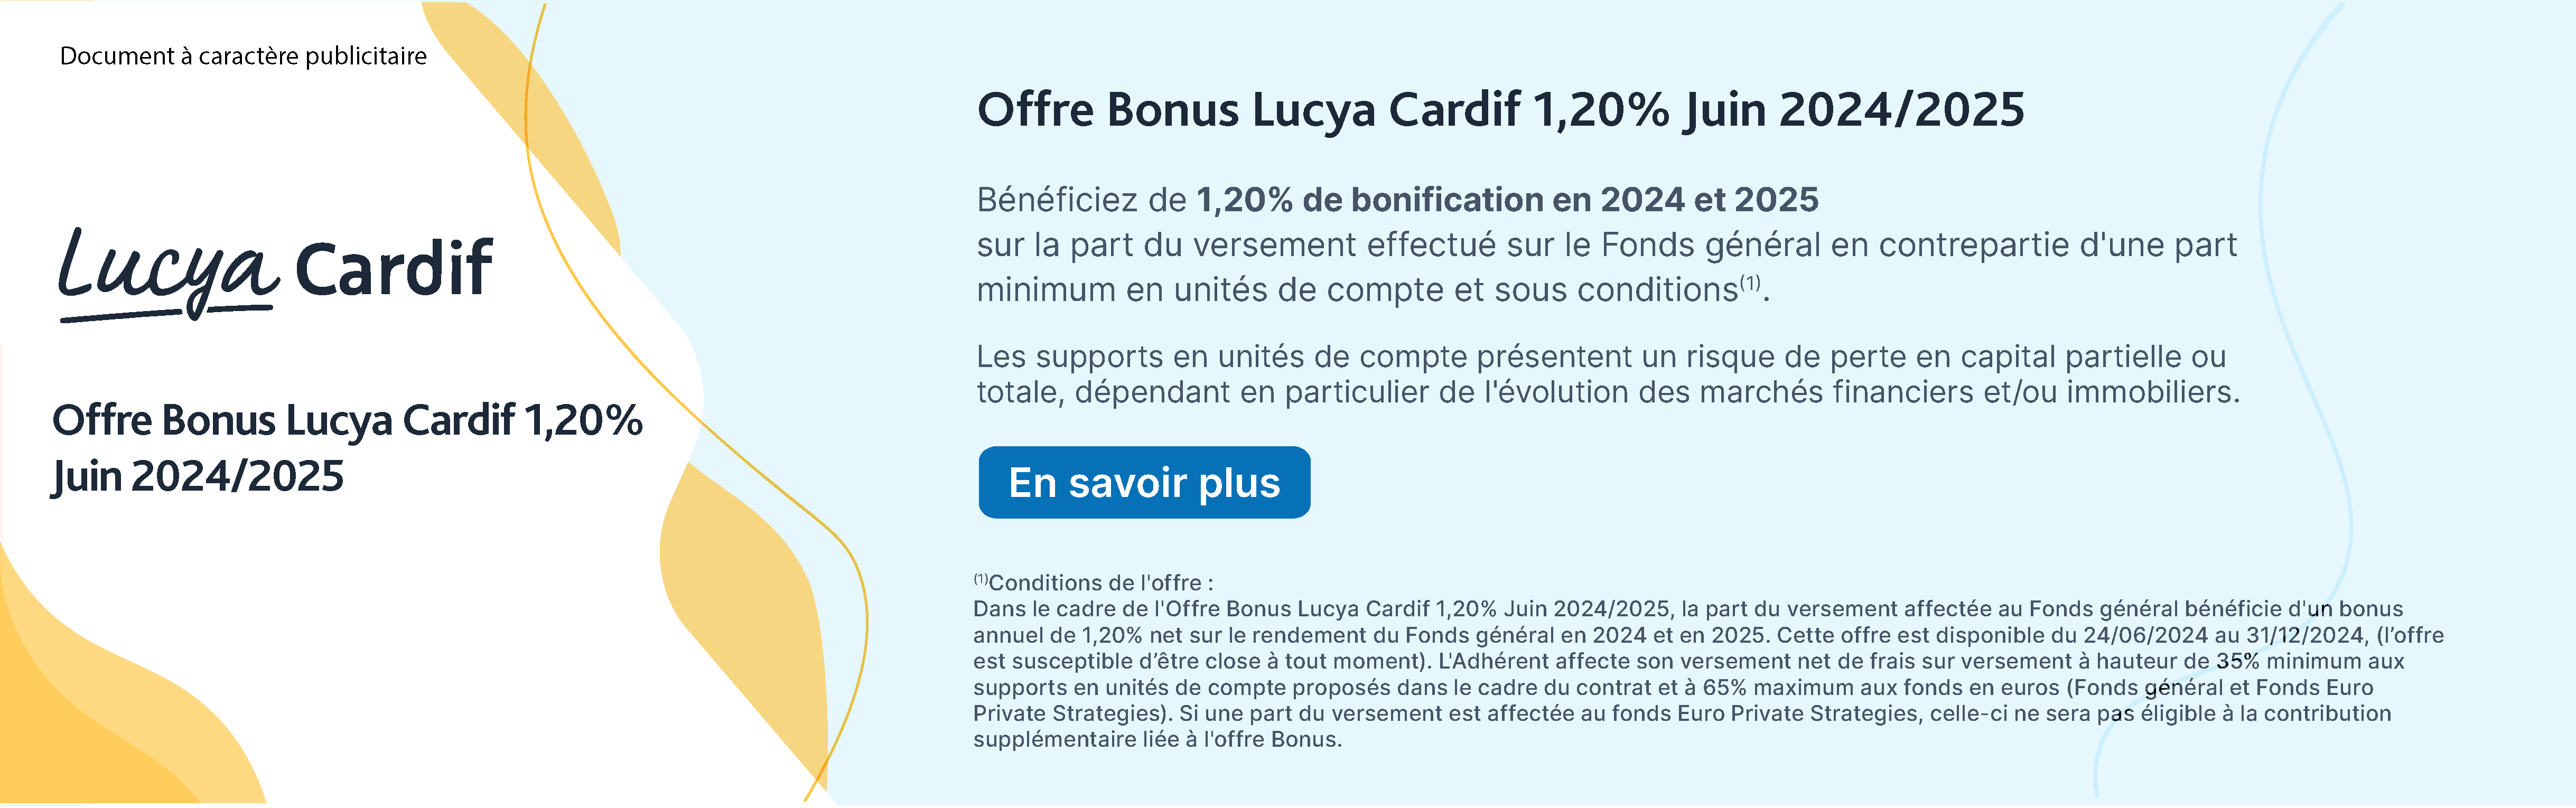 Assurance vie en ligne :Offre Bonus Lucya Cardif 2024/2025